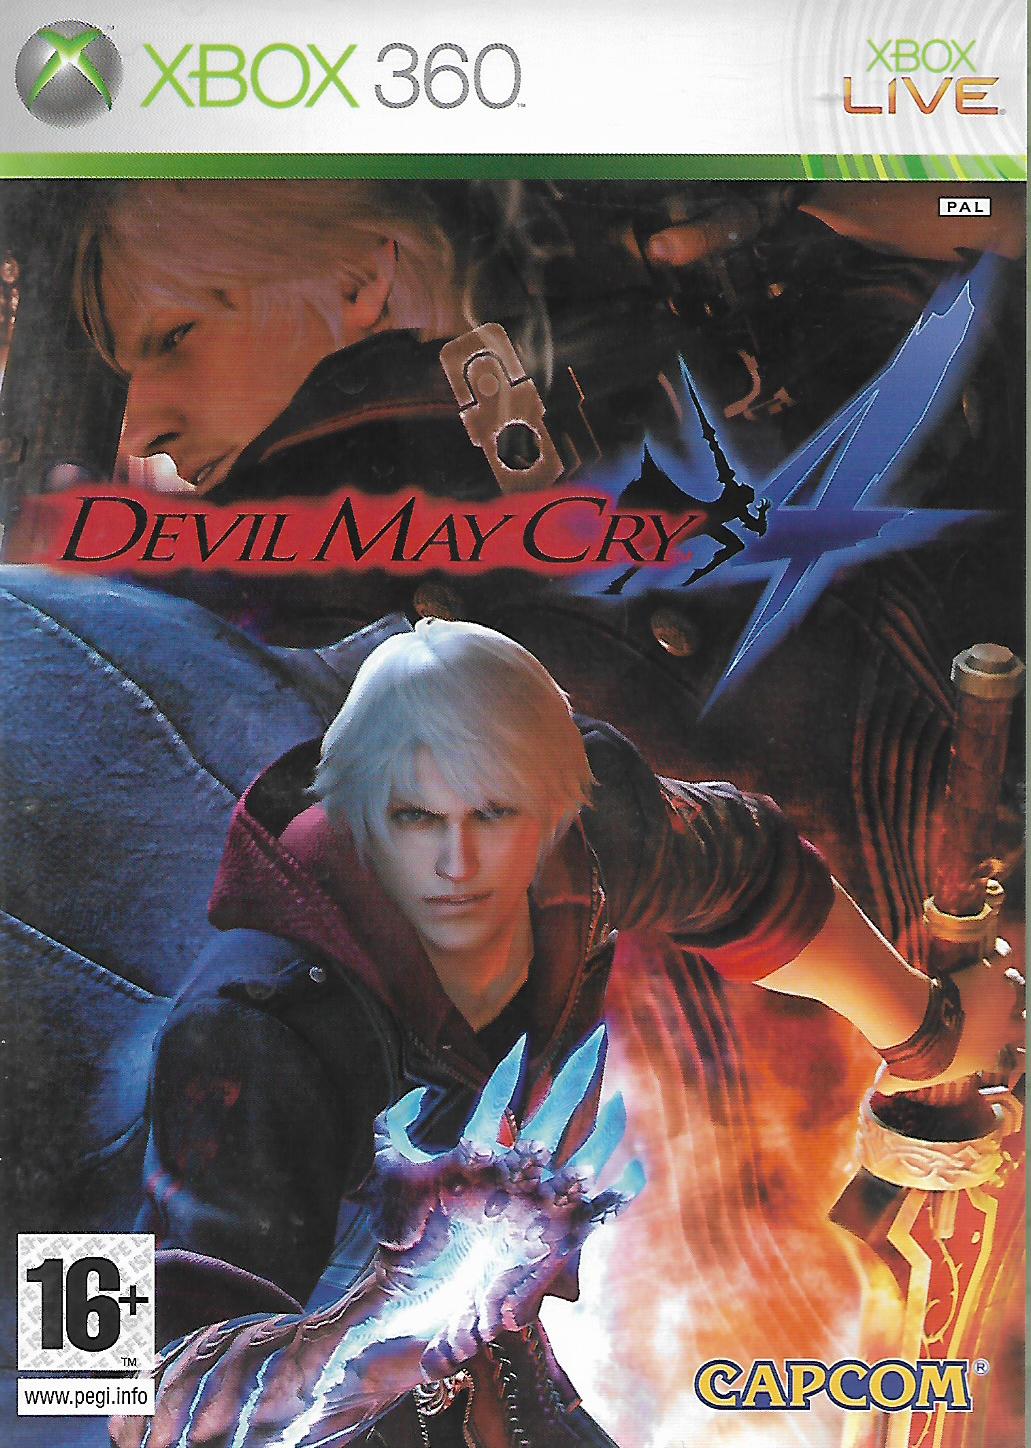 DEVIL MAY CRY 4 (XBOX 360 - bazar)